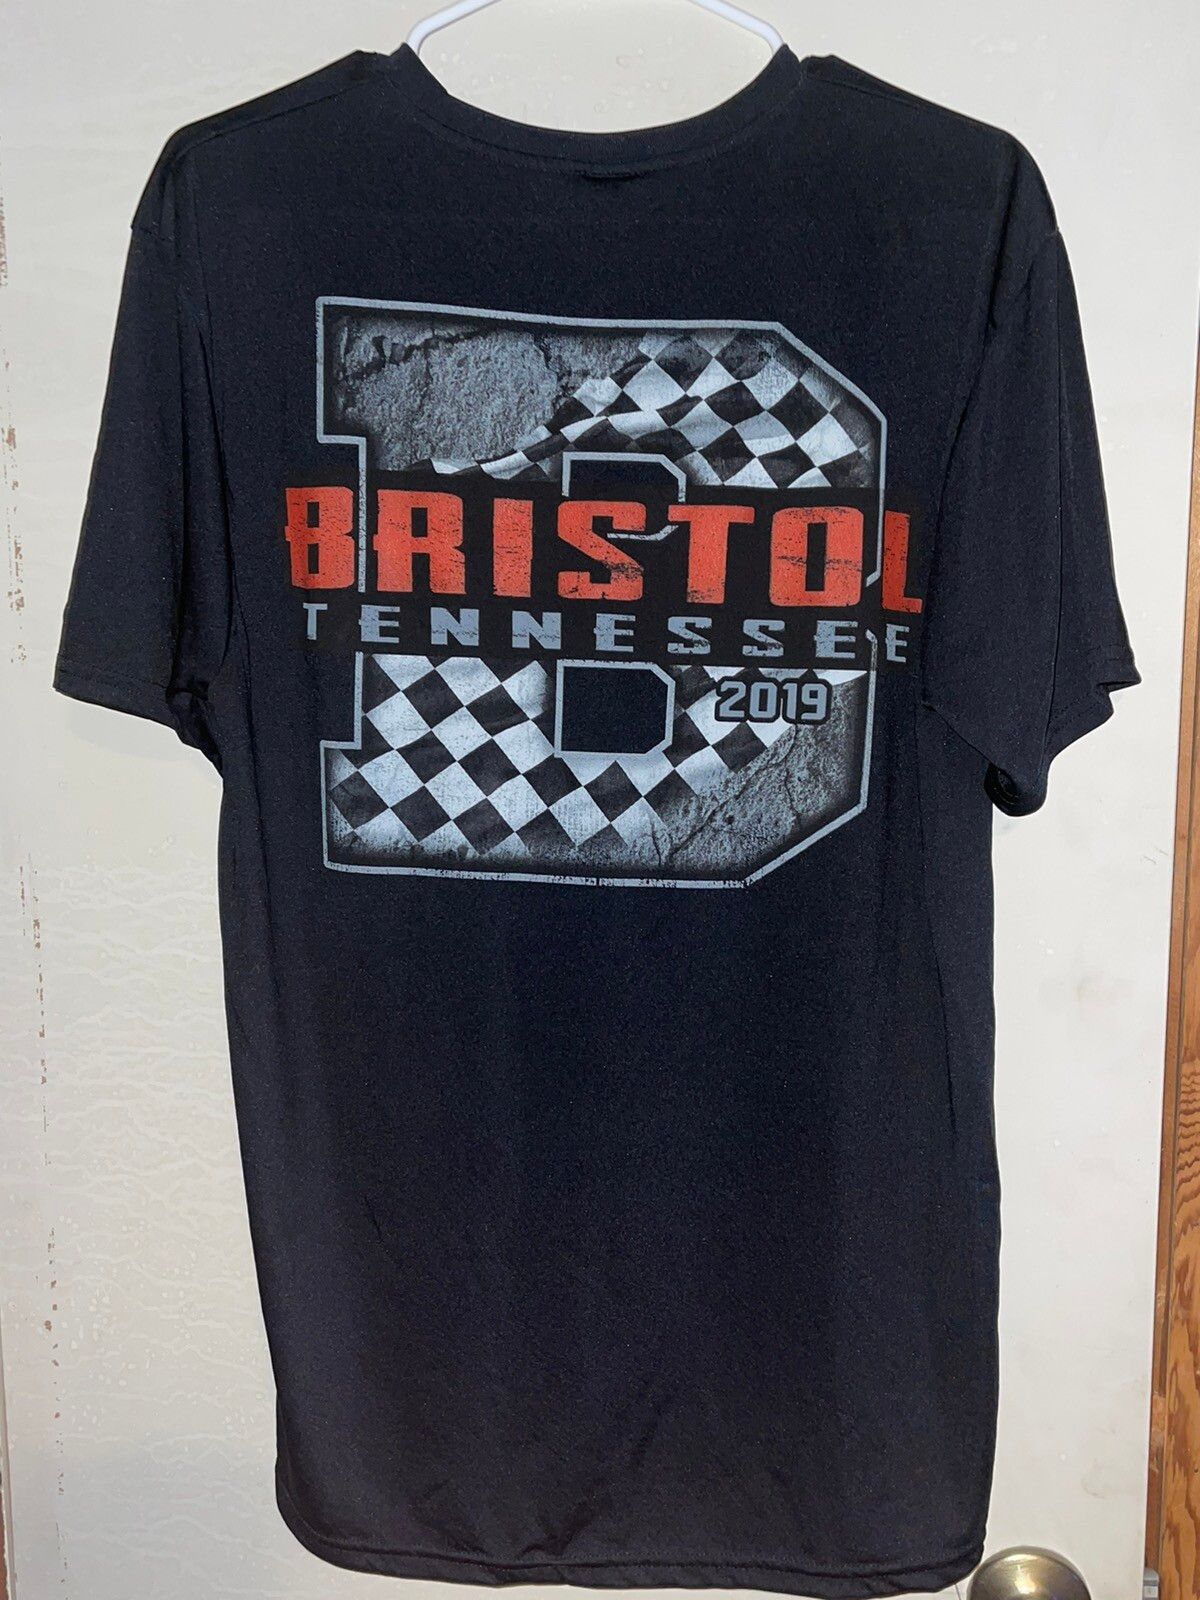 Gildan Bristol Tennessee Racing 2019 T Shirt Mens Size Large Gildan Size US L / EU 52-54 / 3 - 2 Preview